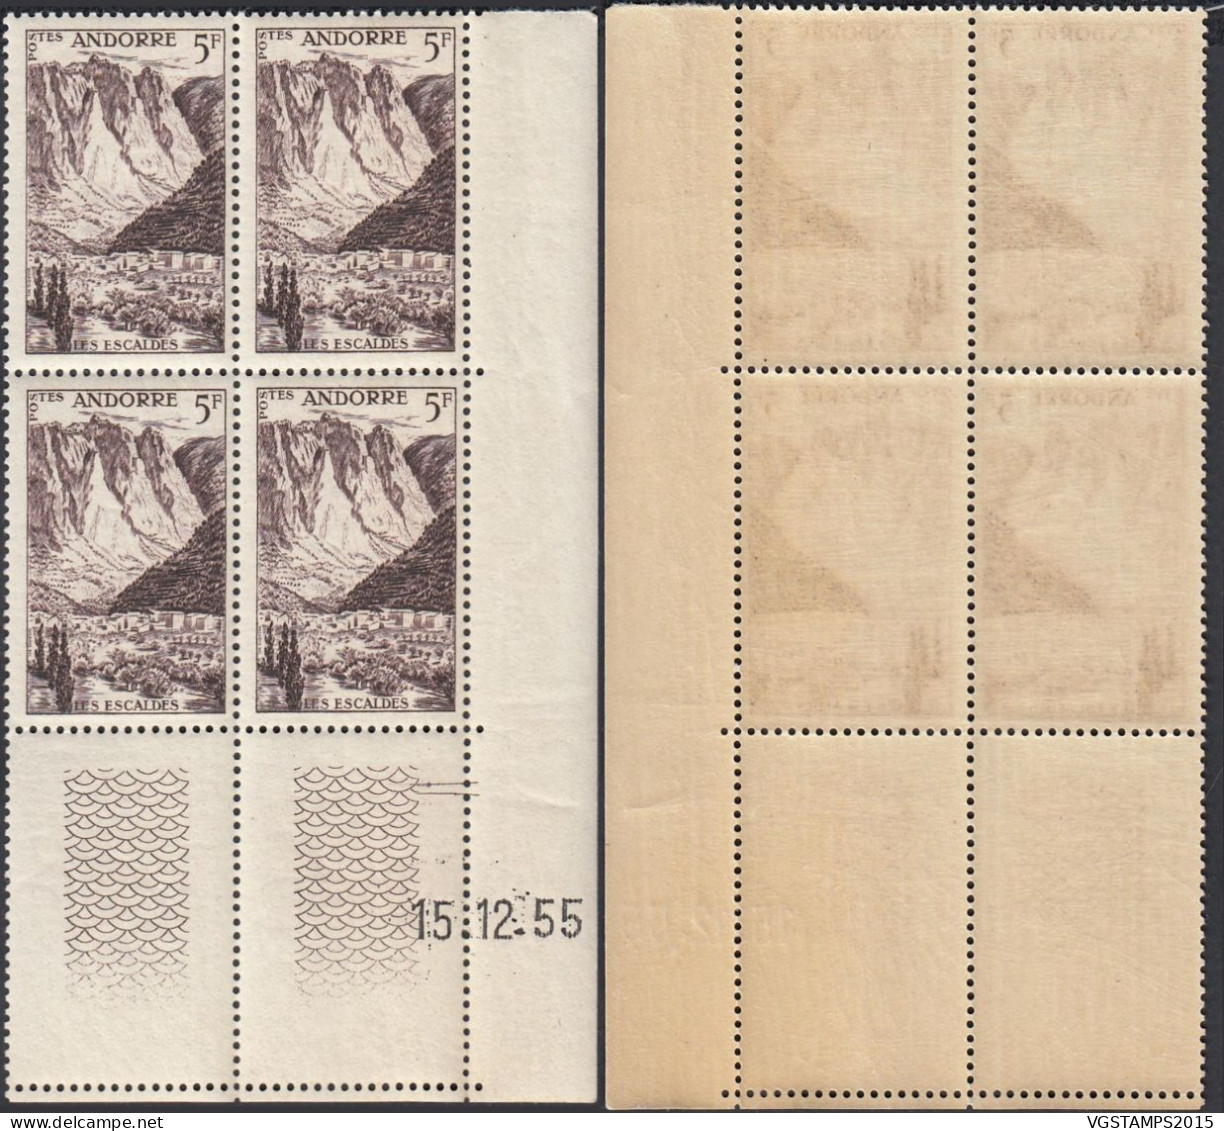 Andorre 1955 - Andorre Française - Timbres Neufs. Yvert Nr.: 141. Michel Nr.: 145. Coin Daté: 15/12/55... (EB) DC-12548 - Neufs